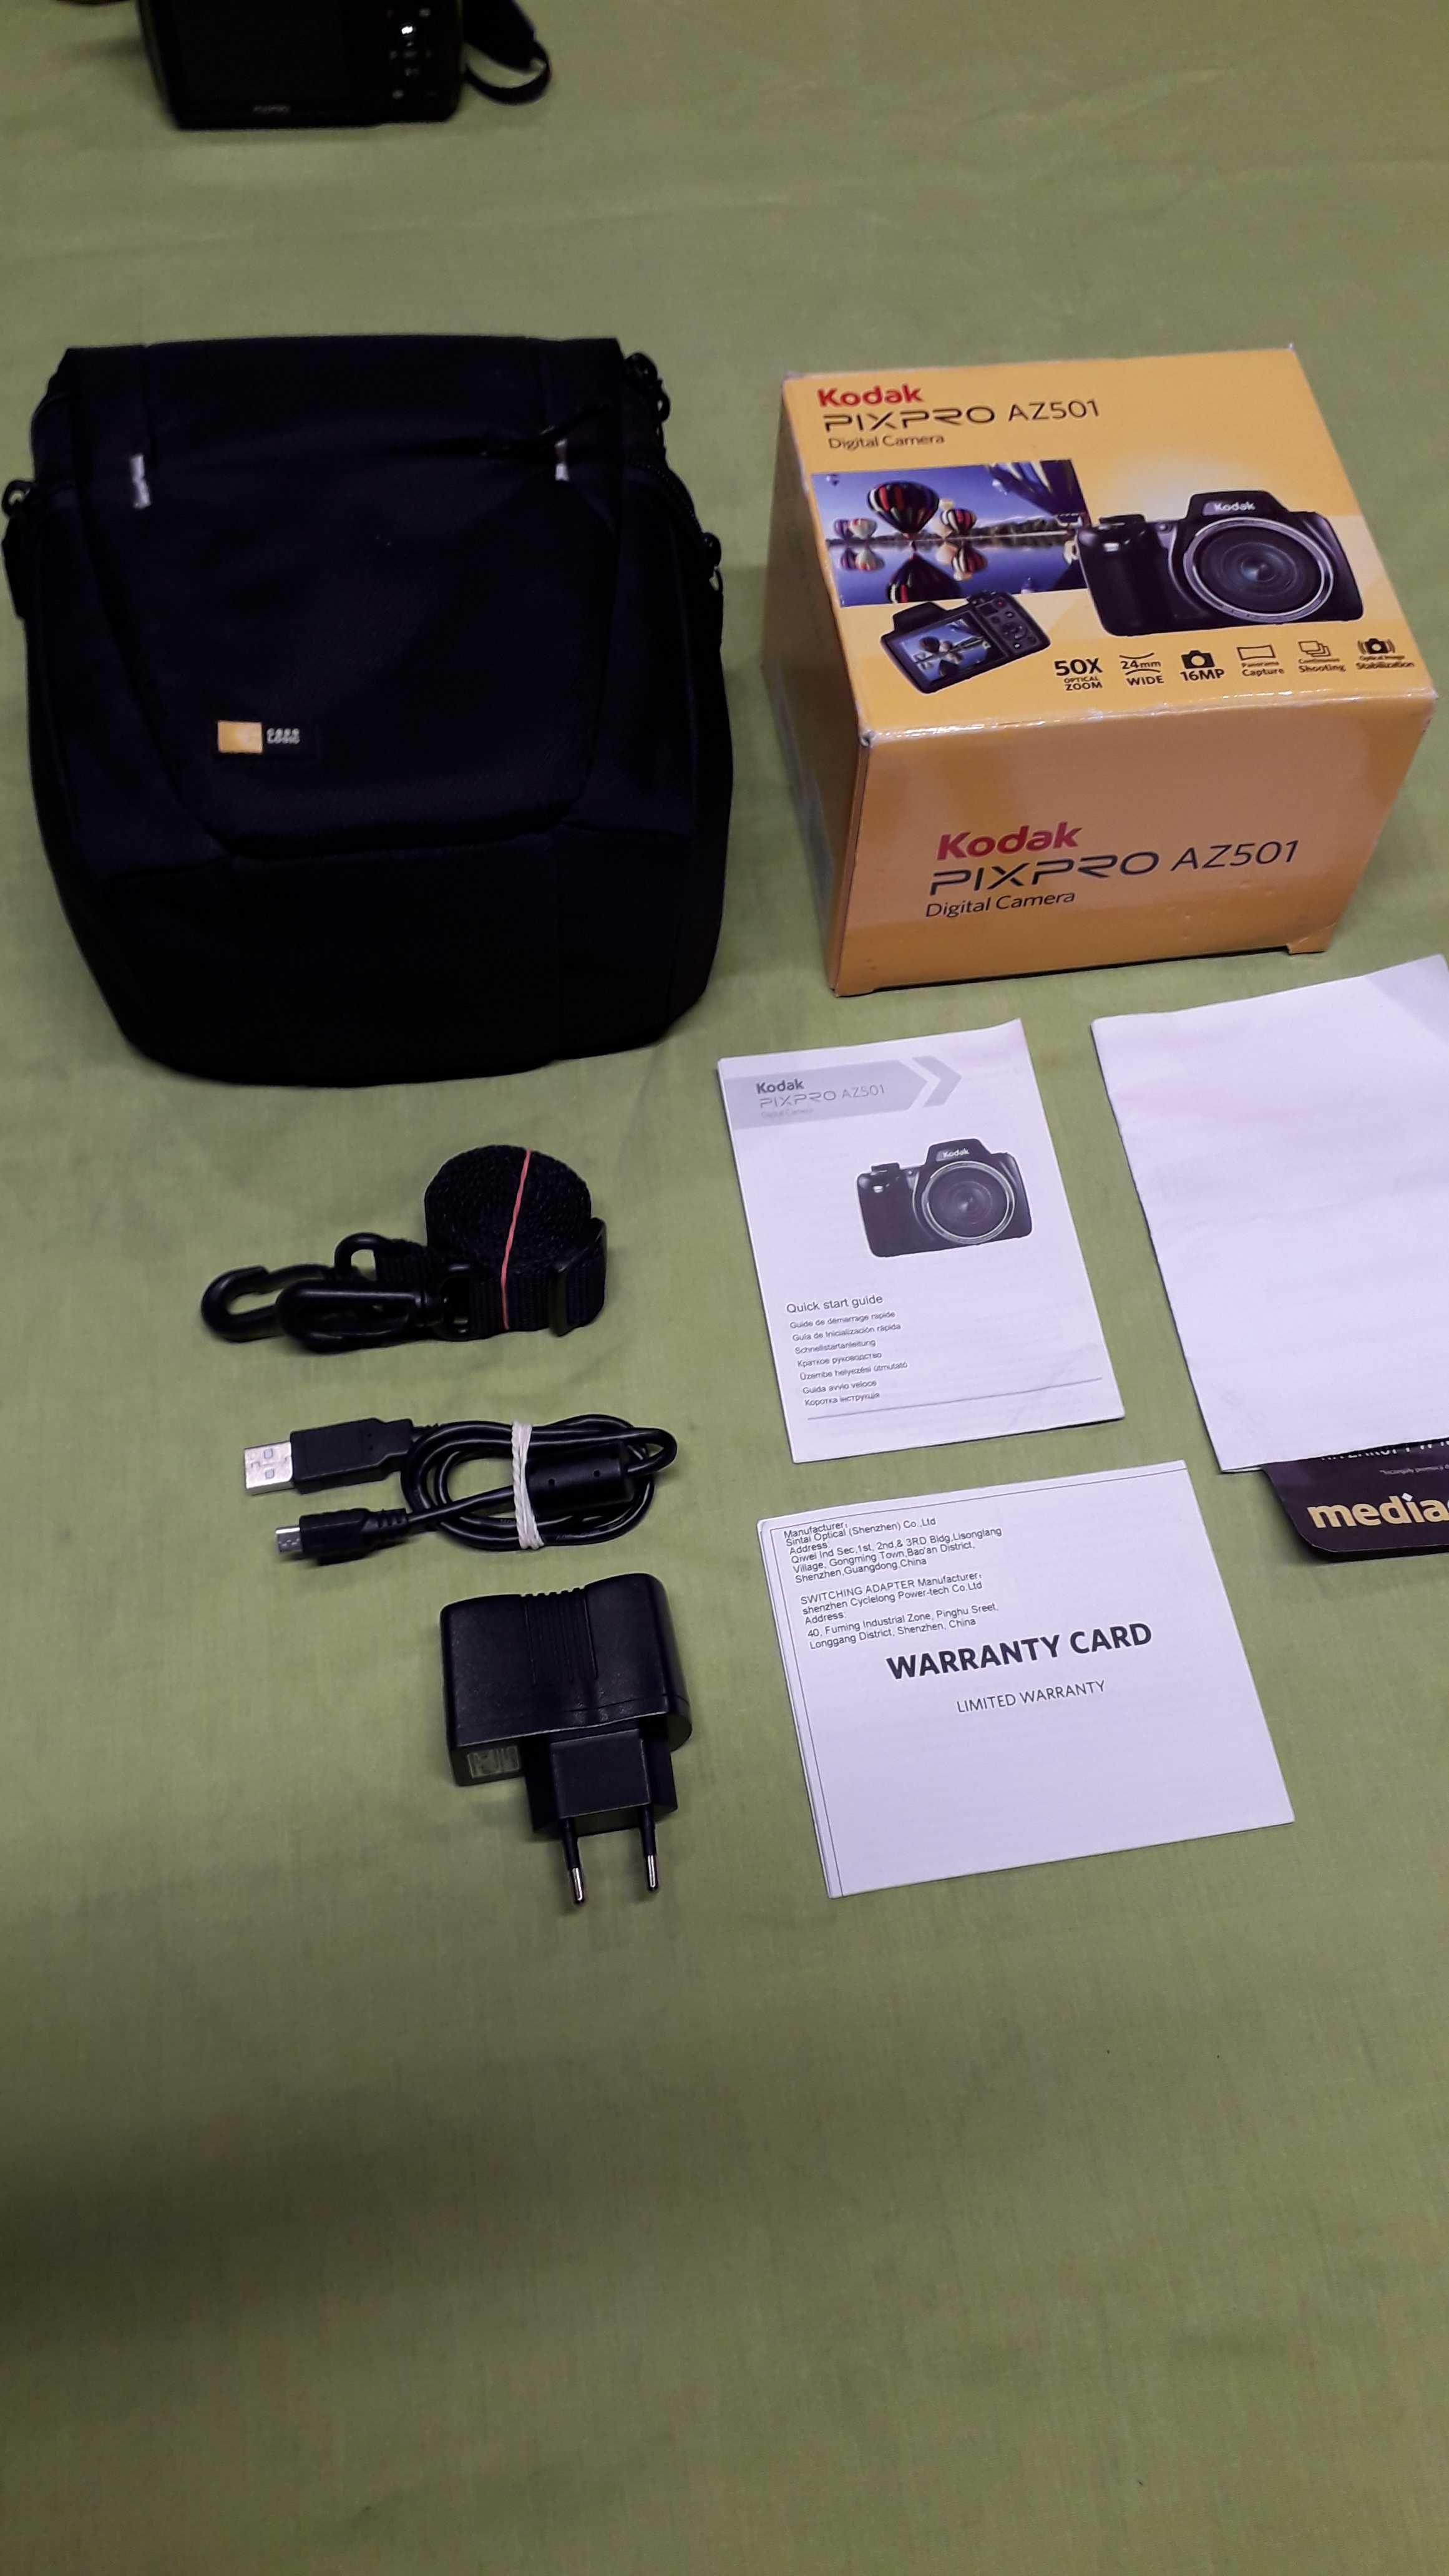 Kodak pixpro AZ501  aparat cyfrowy,torba, ładowarka,8GBkarta  jak nowy